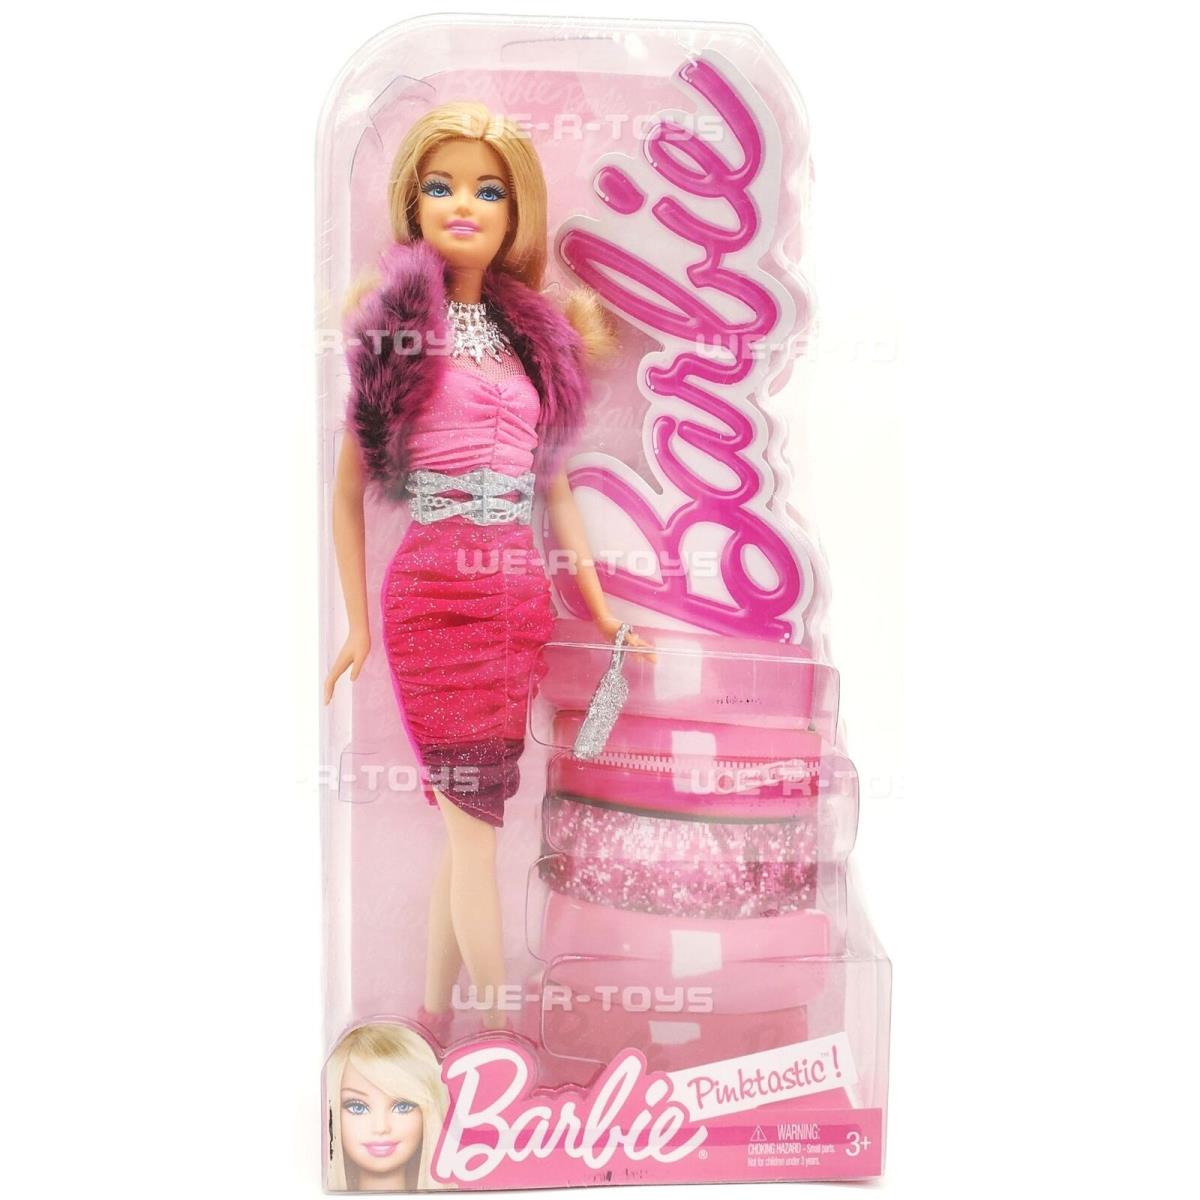 Barbie Pinktastic Kohl`s Exclusive Doll 2012 Mattel No X6995 Nrfb